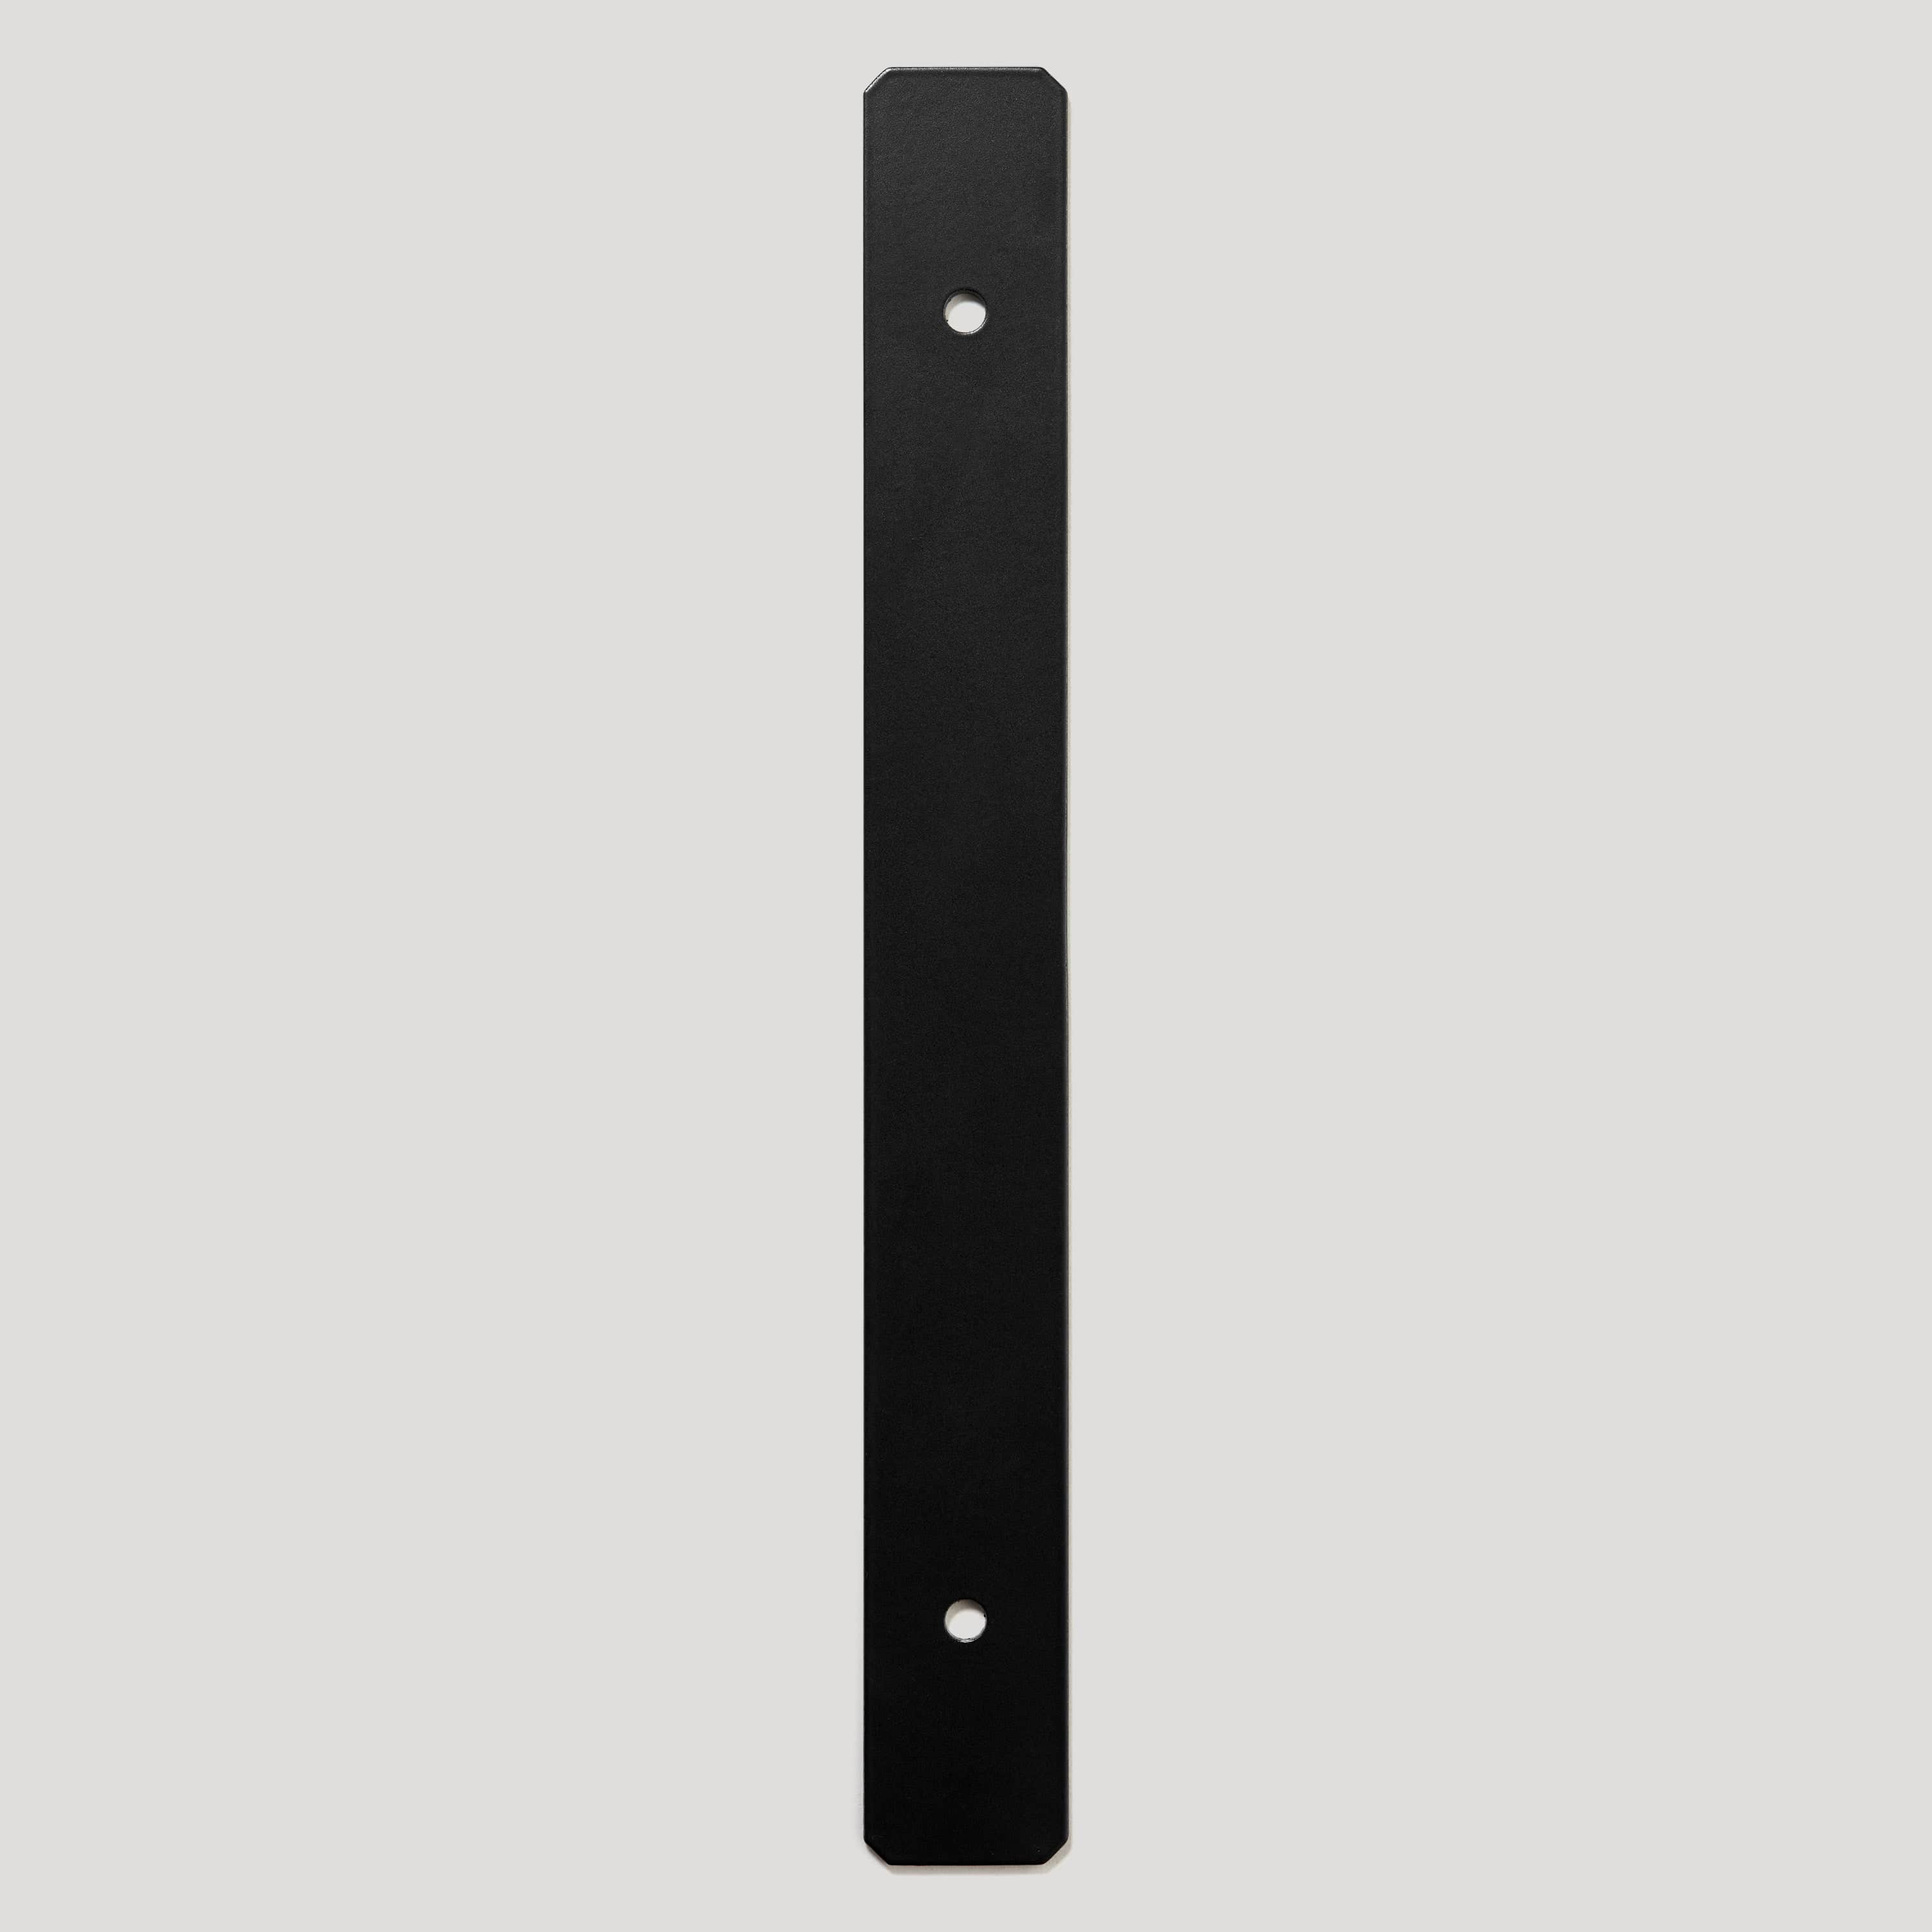 Plank Hardware Handles & Knobs BRUNO Industrial Handle - Black